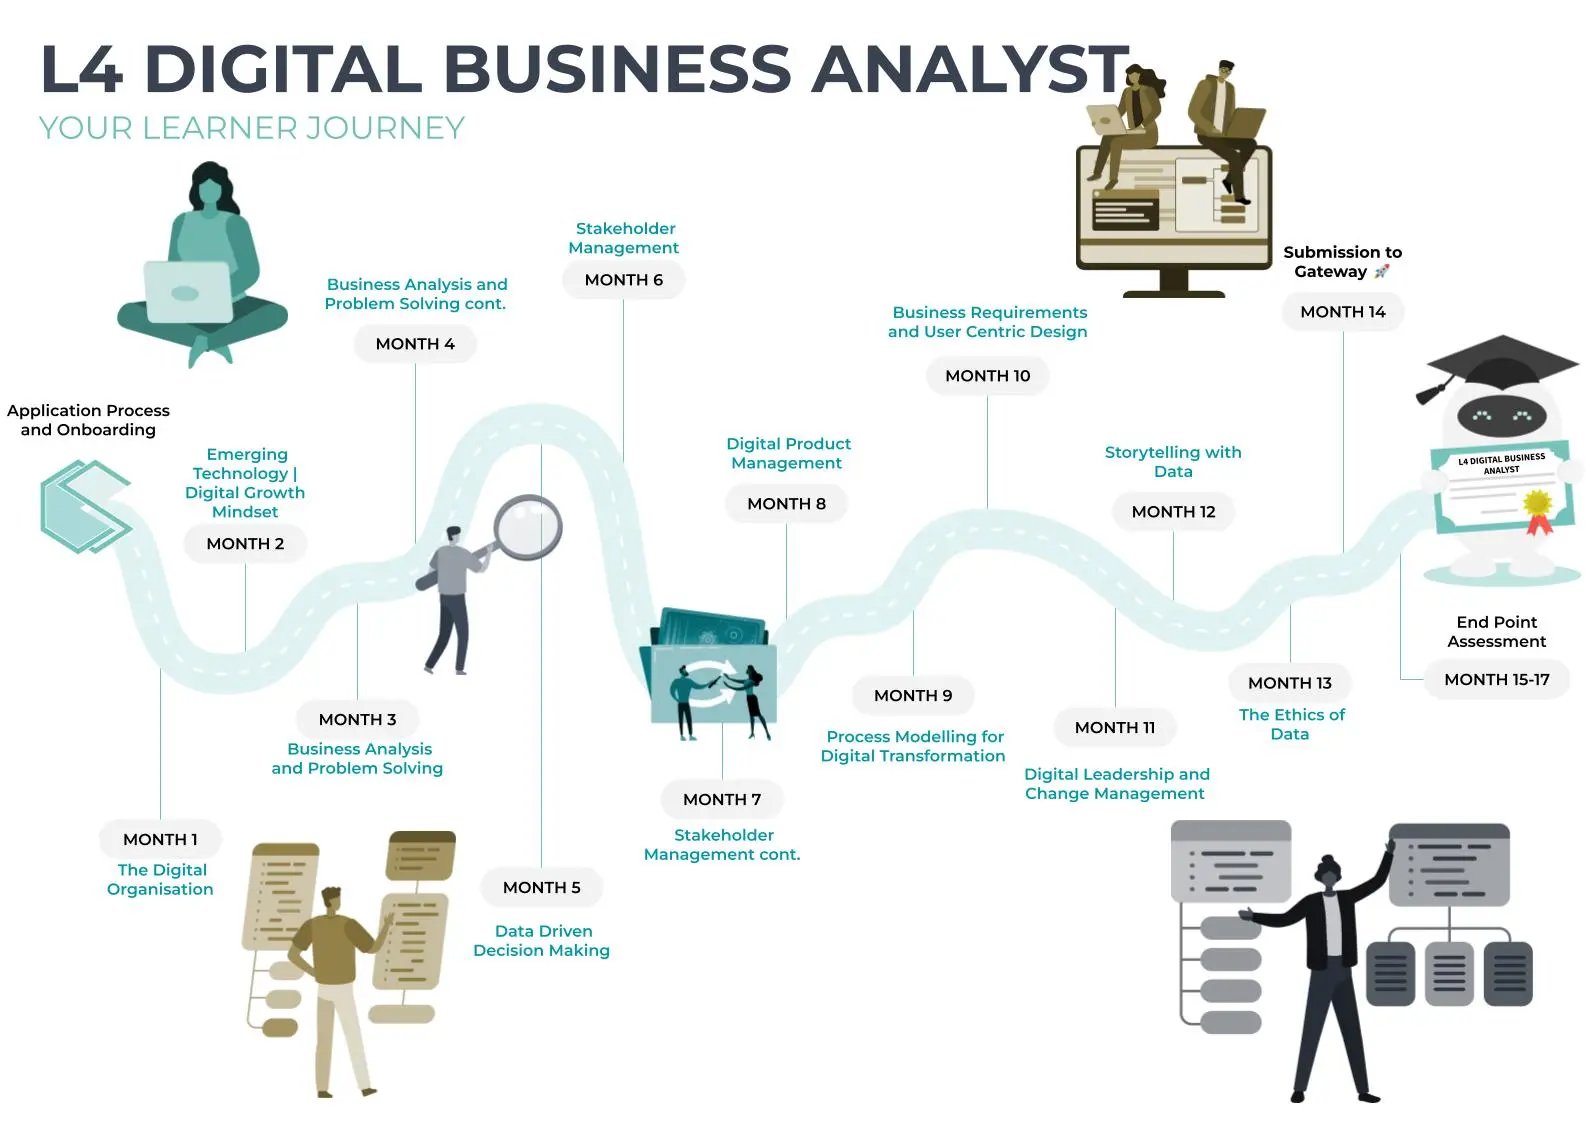 Digital Business Analyst apprenticeship curriculum